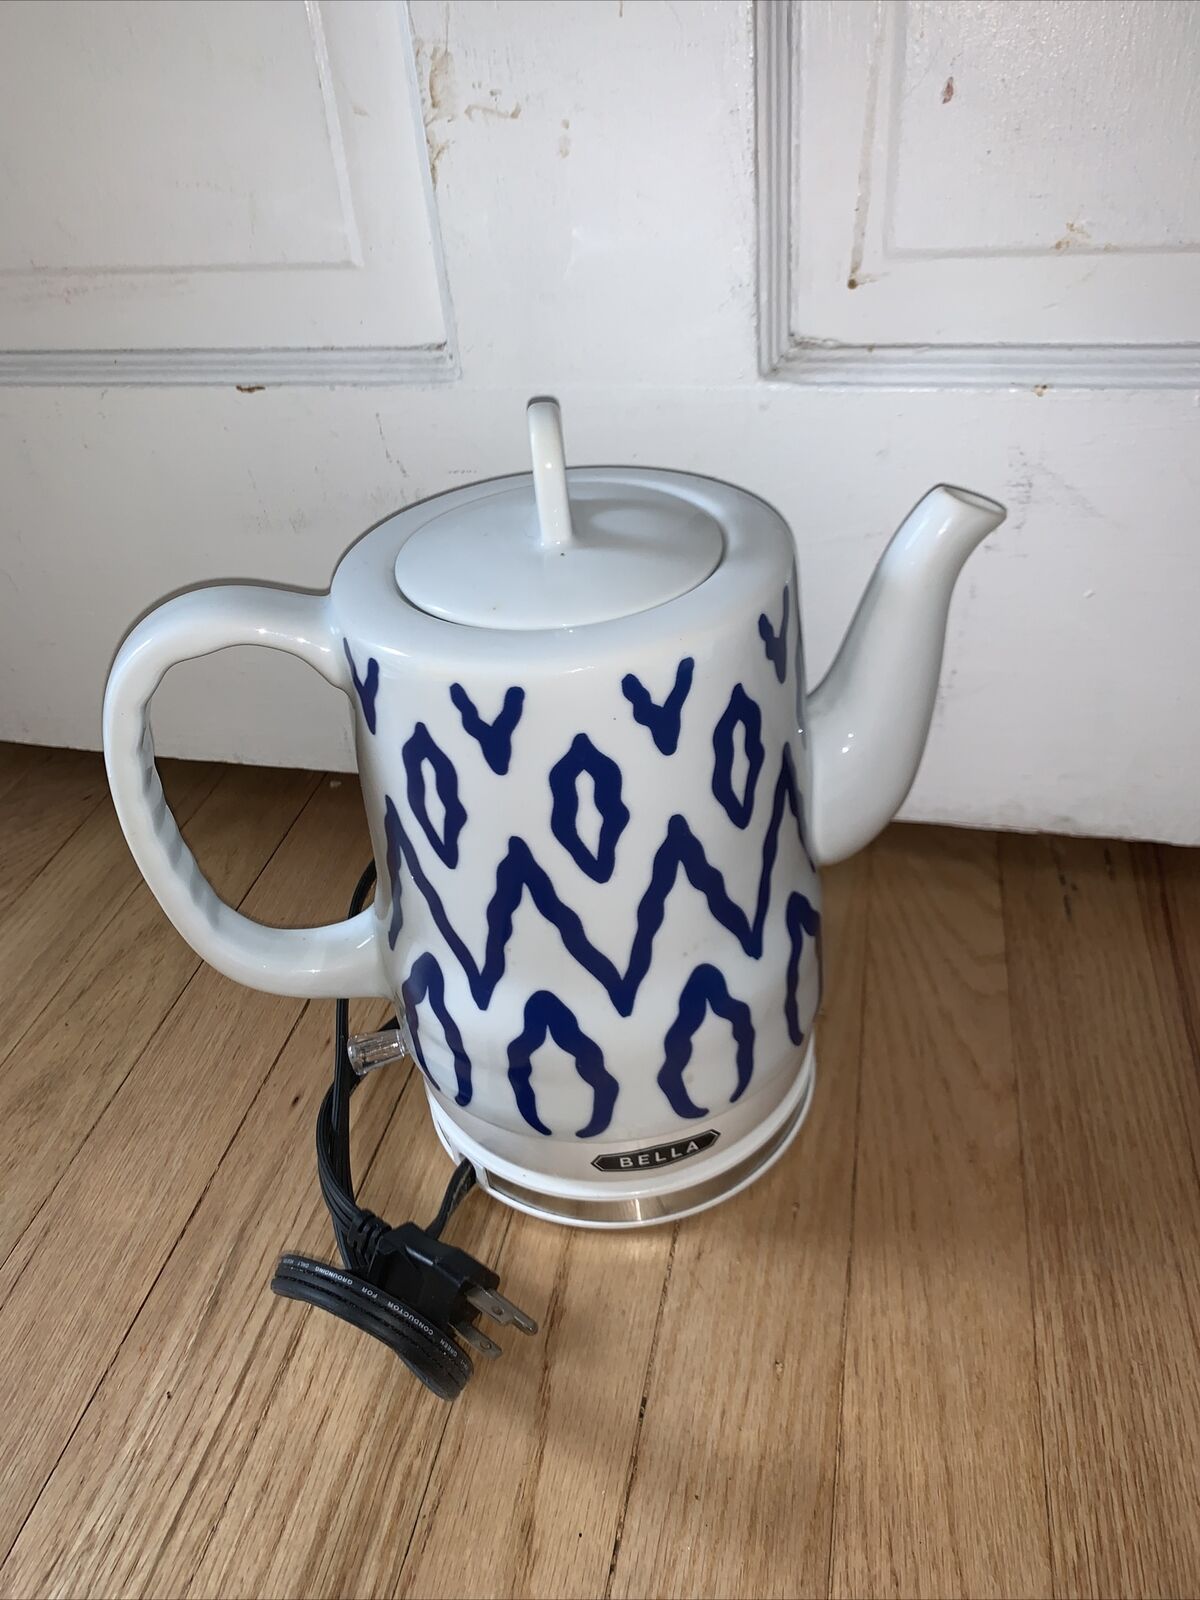 Kitchen Flower Wireless Electric Kettle Teapot Tea Port 1.8L 220V